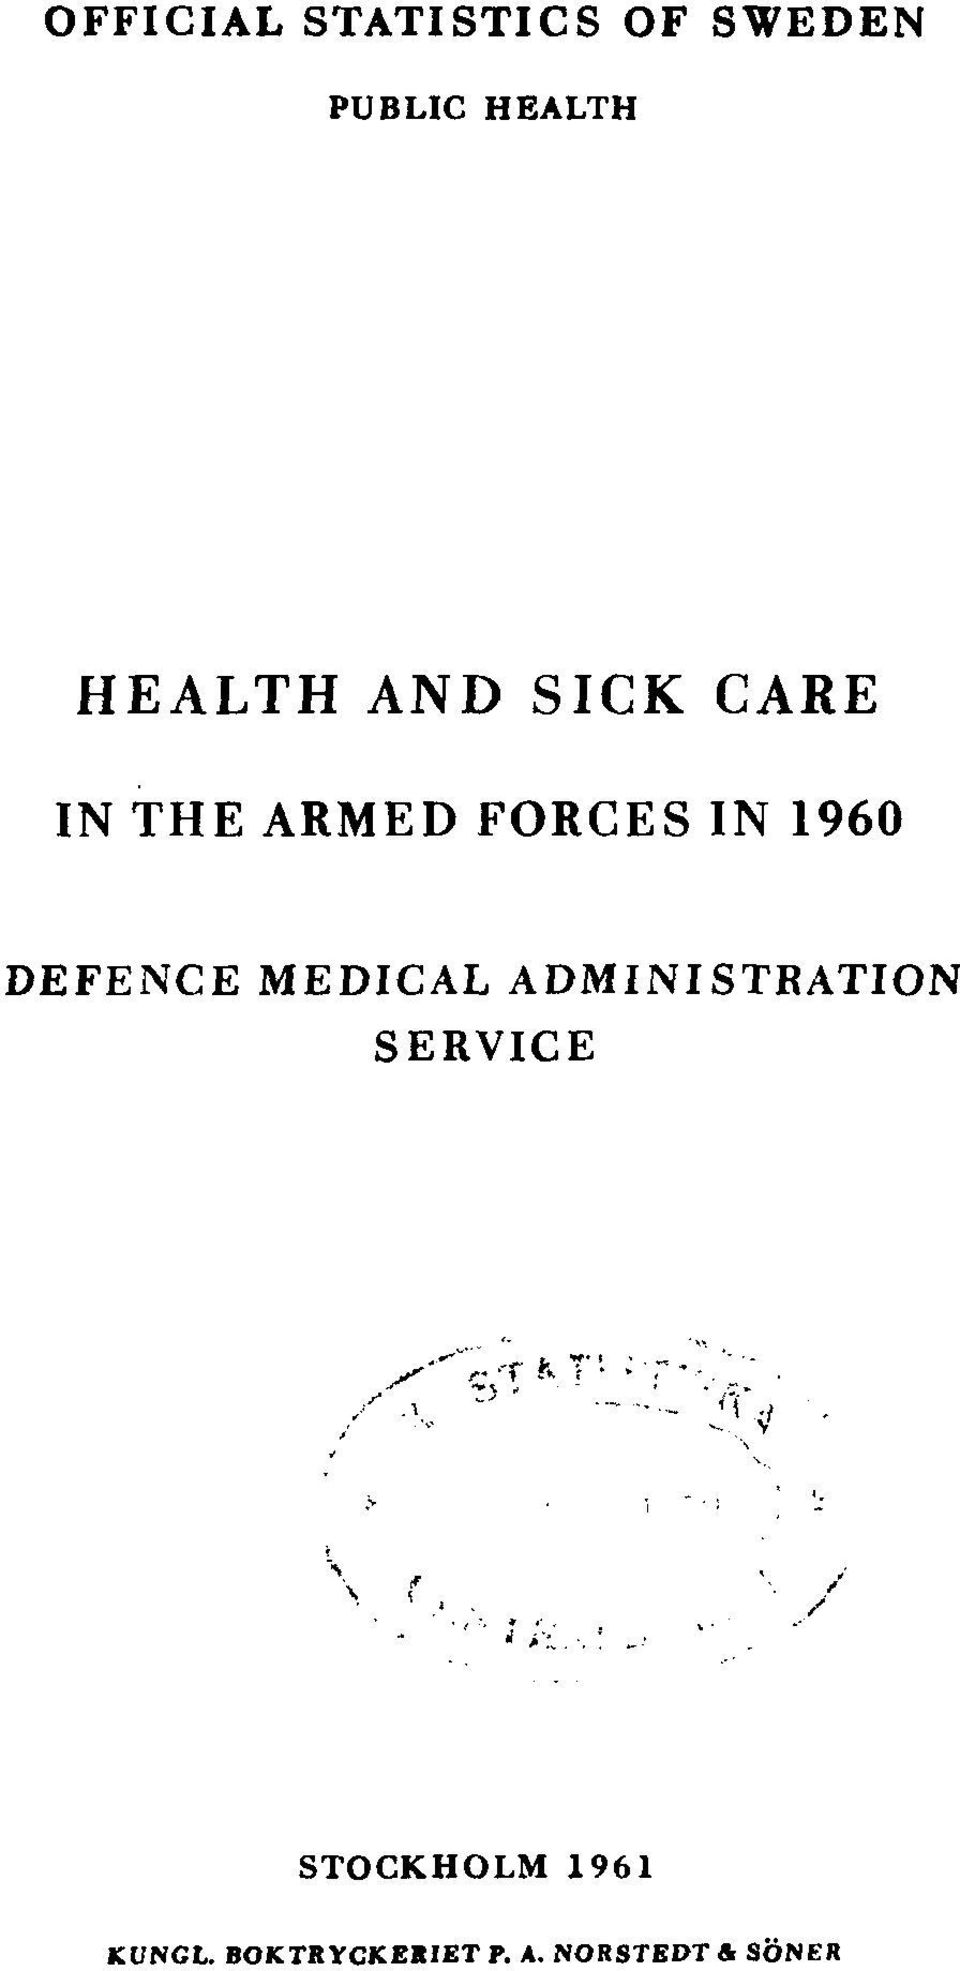 1960 DEFENCE MEDICAL ADMINISTRATION SERVICE